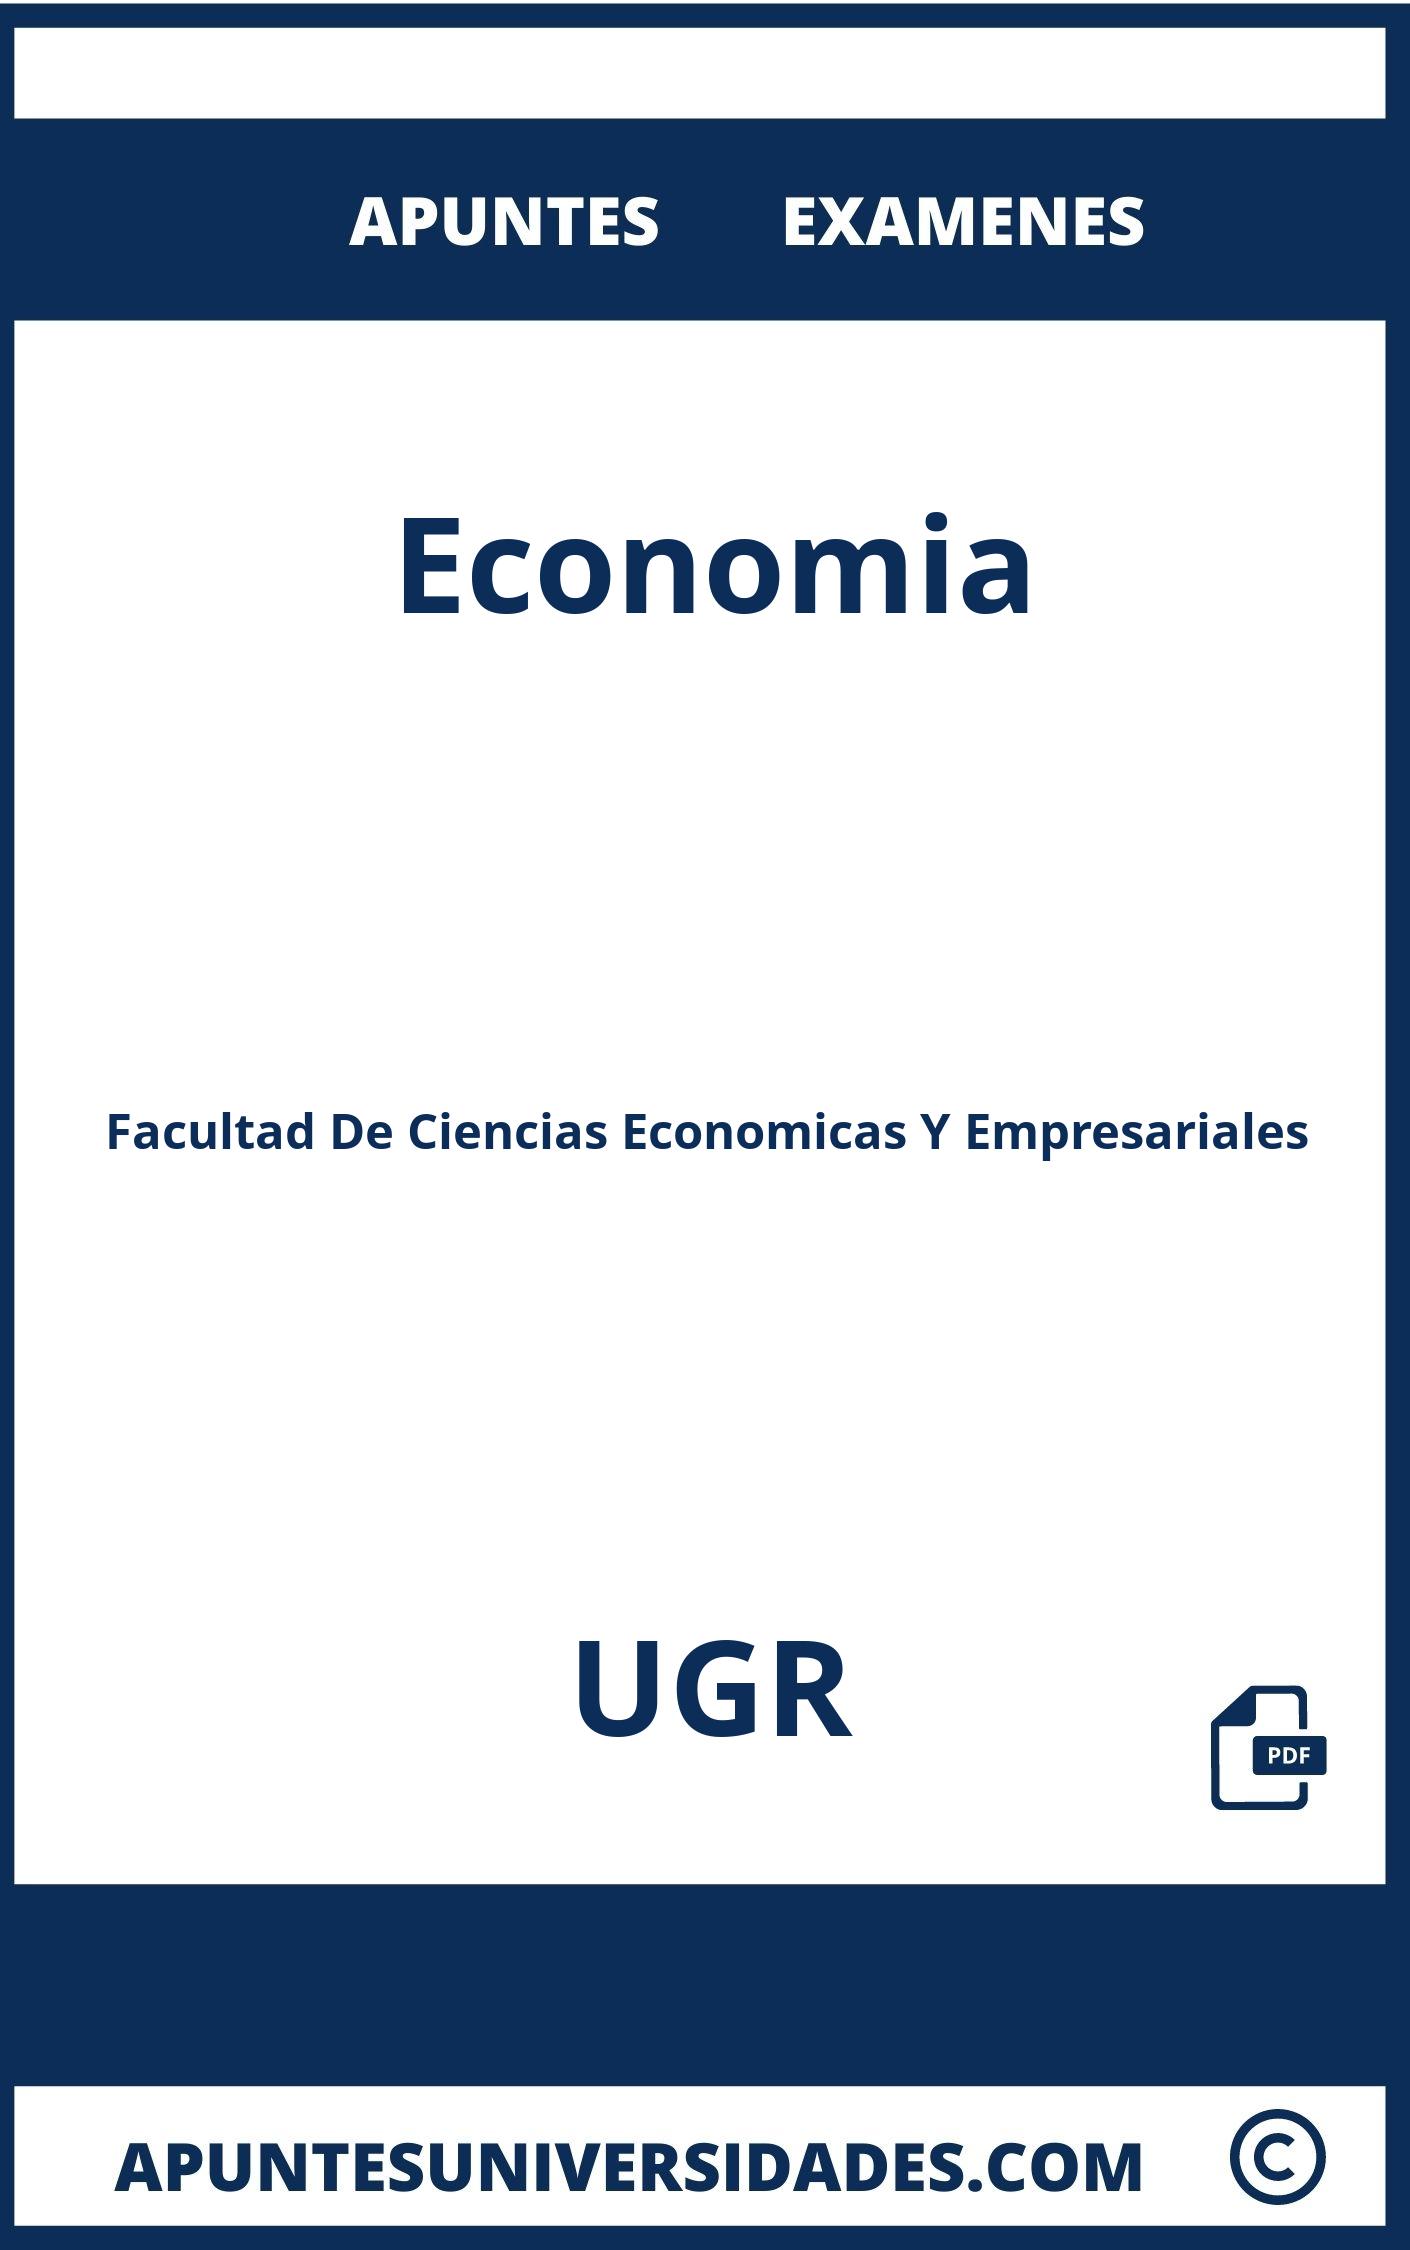 Examenes Apuntes Economia UGR